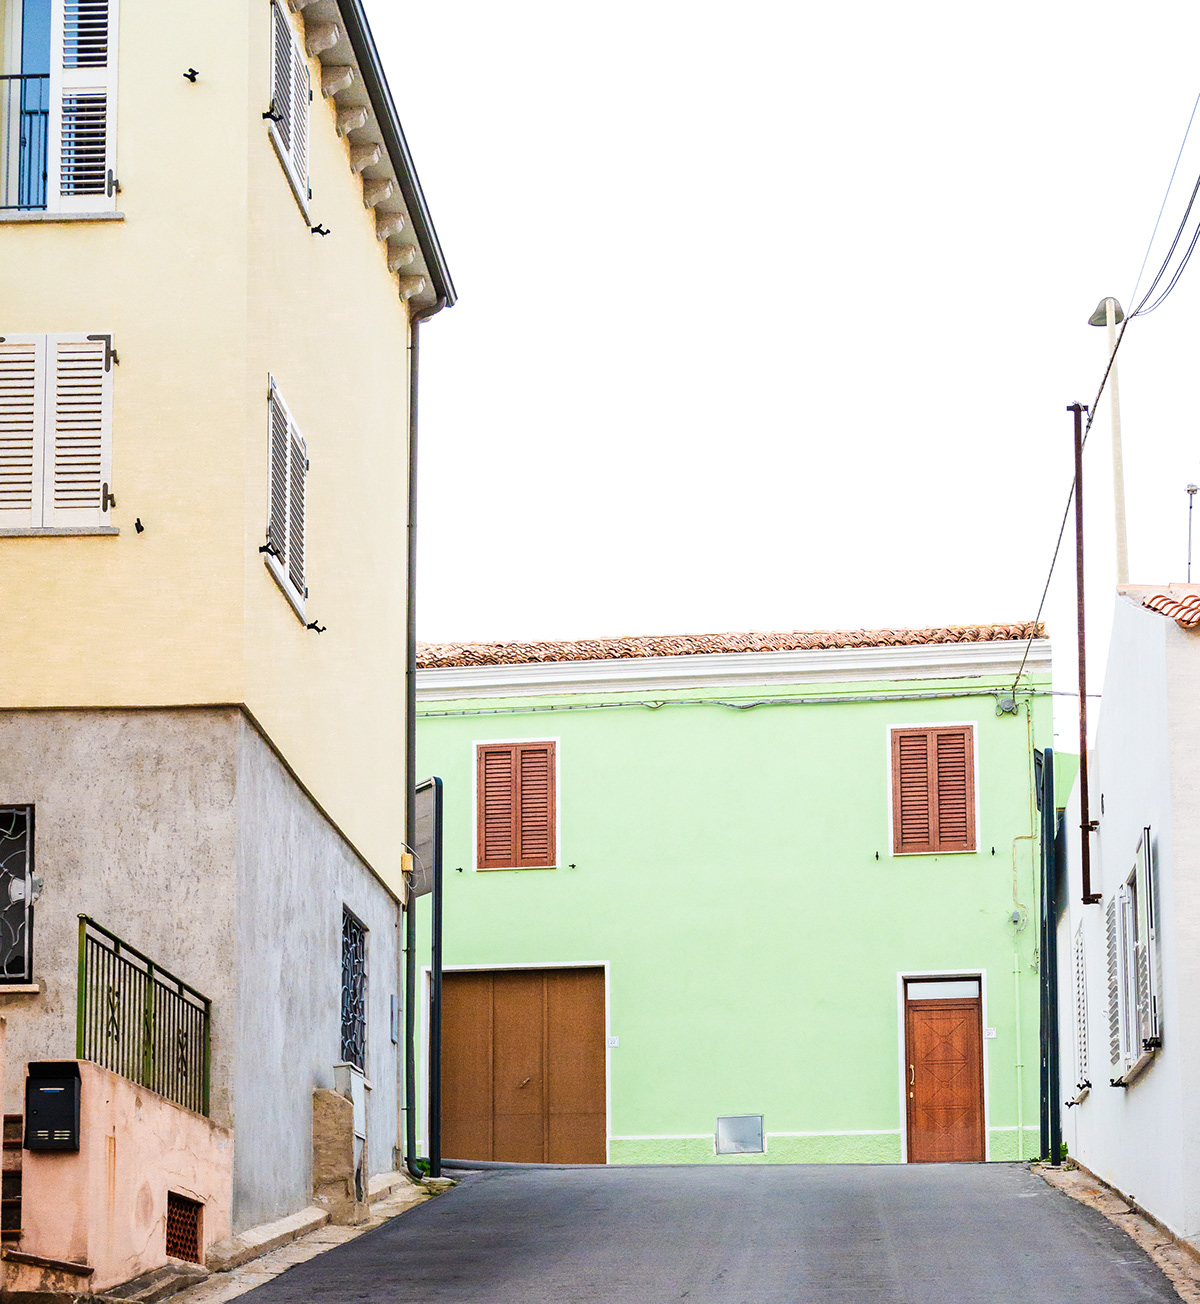 sardinia colors shapes italia Photography  streets stairs geometric vehicles sardegna